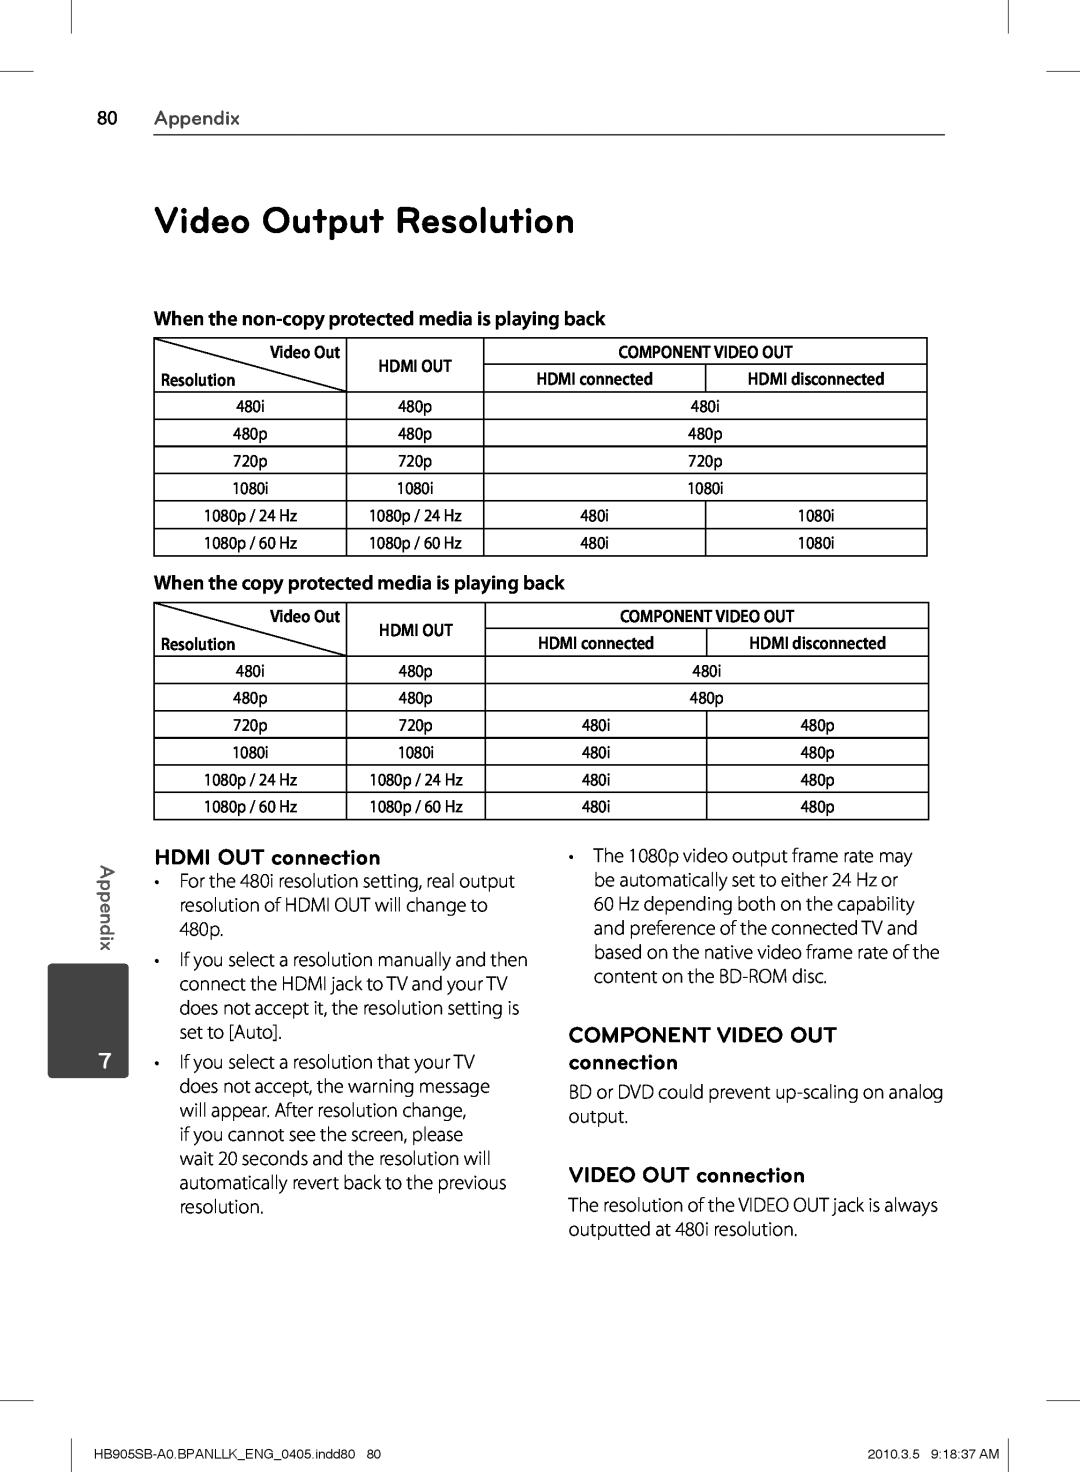 LG Electronics HB905SB Video Output Resolution, HDMI OUT connection, COMPONENT VIDEO OUT connection, 80Appendix 